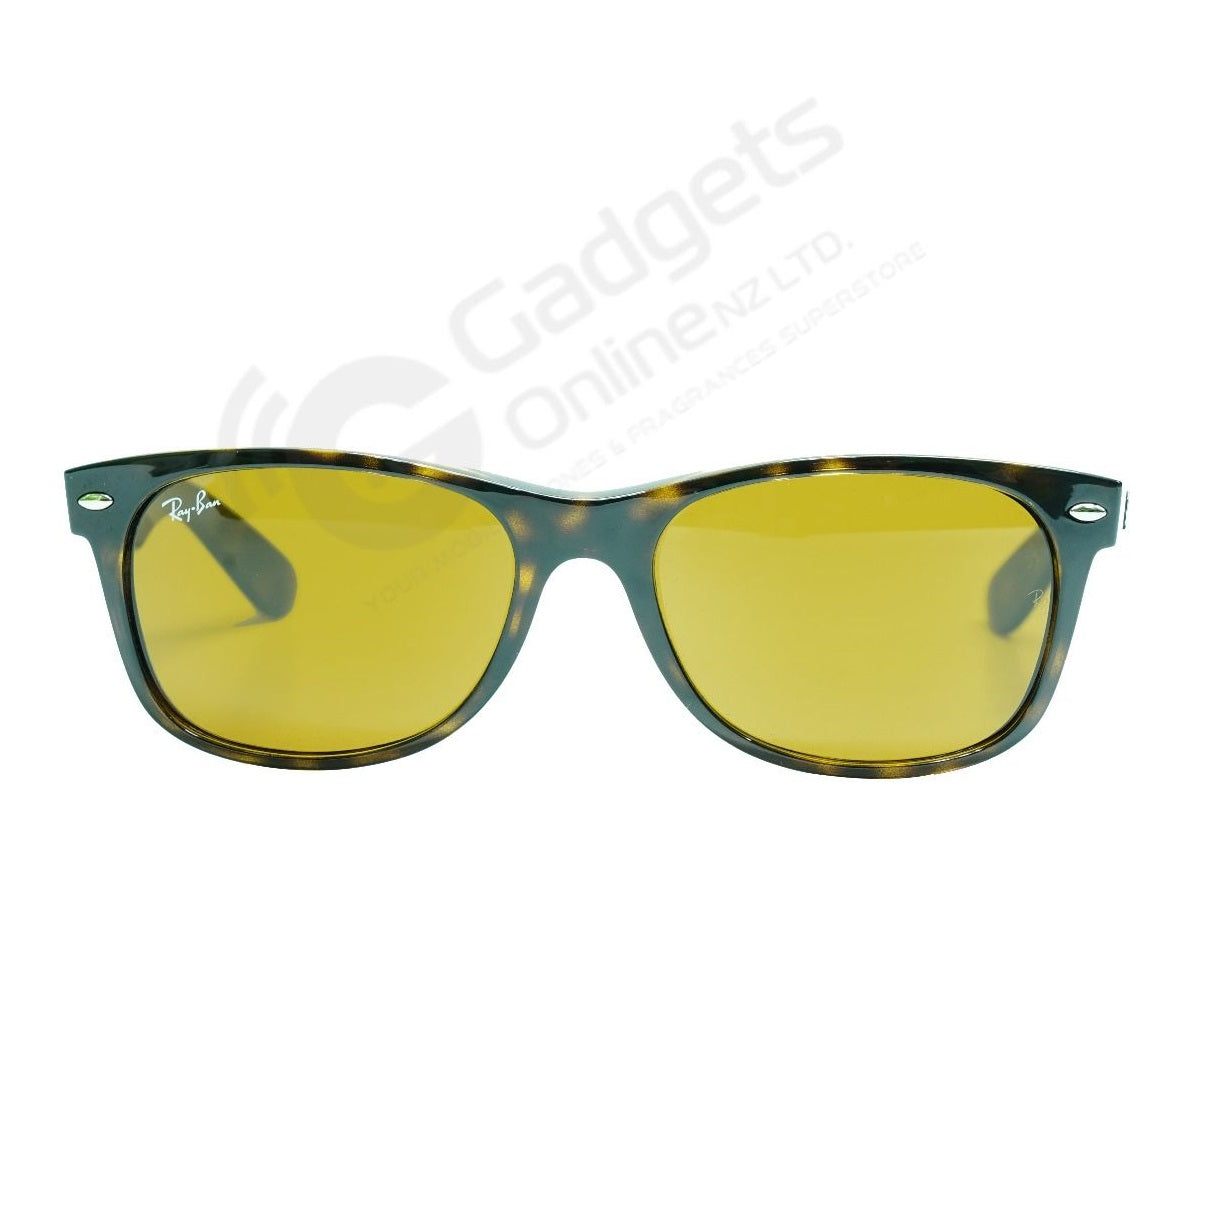 Ray-Ban RB2132 710 Wayfarer Classic 55 mm Tortoise Sunglasses for Men